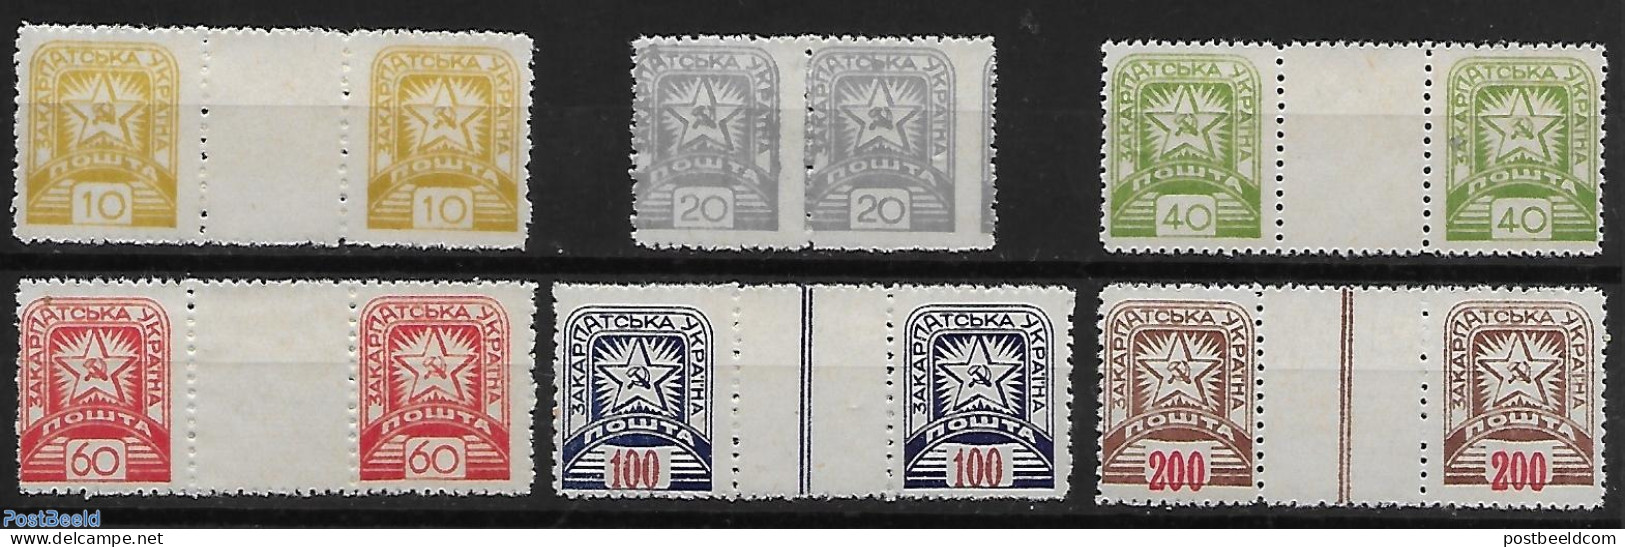 Ukraine 1945 5 X Intermediate Bridge + 1 X Error, Mint NH, Various - Errors, Misprints, Plate Flaws - Oddities On Stamps